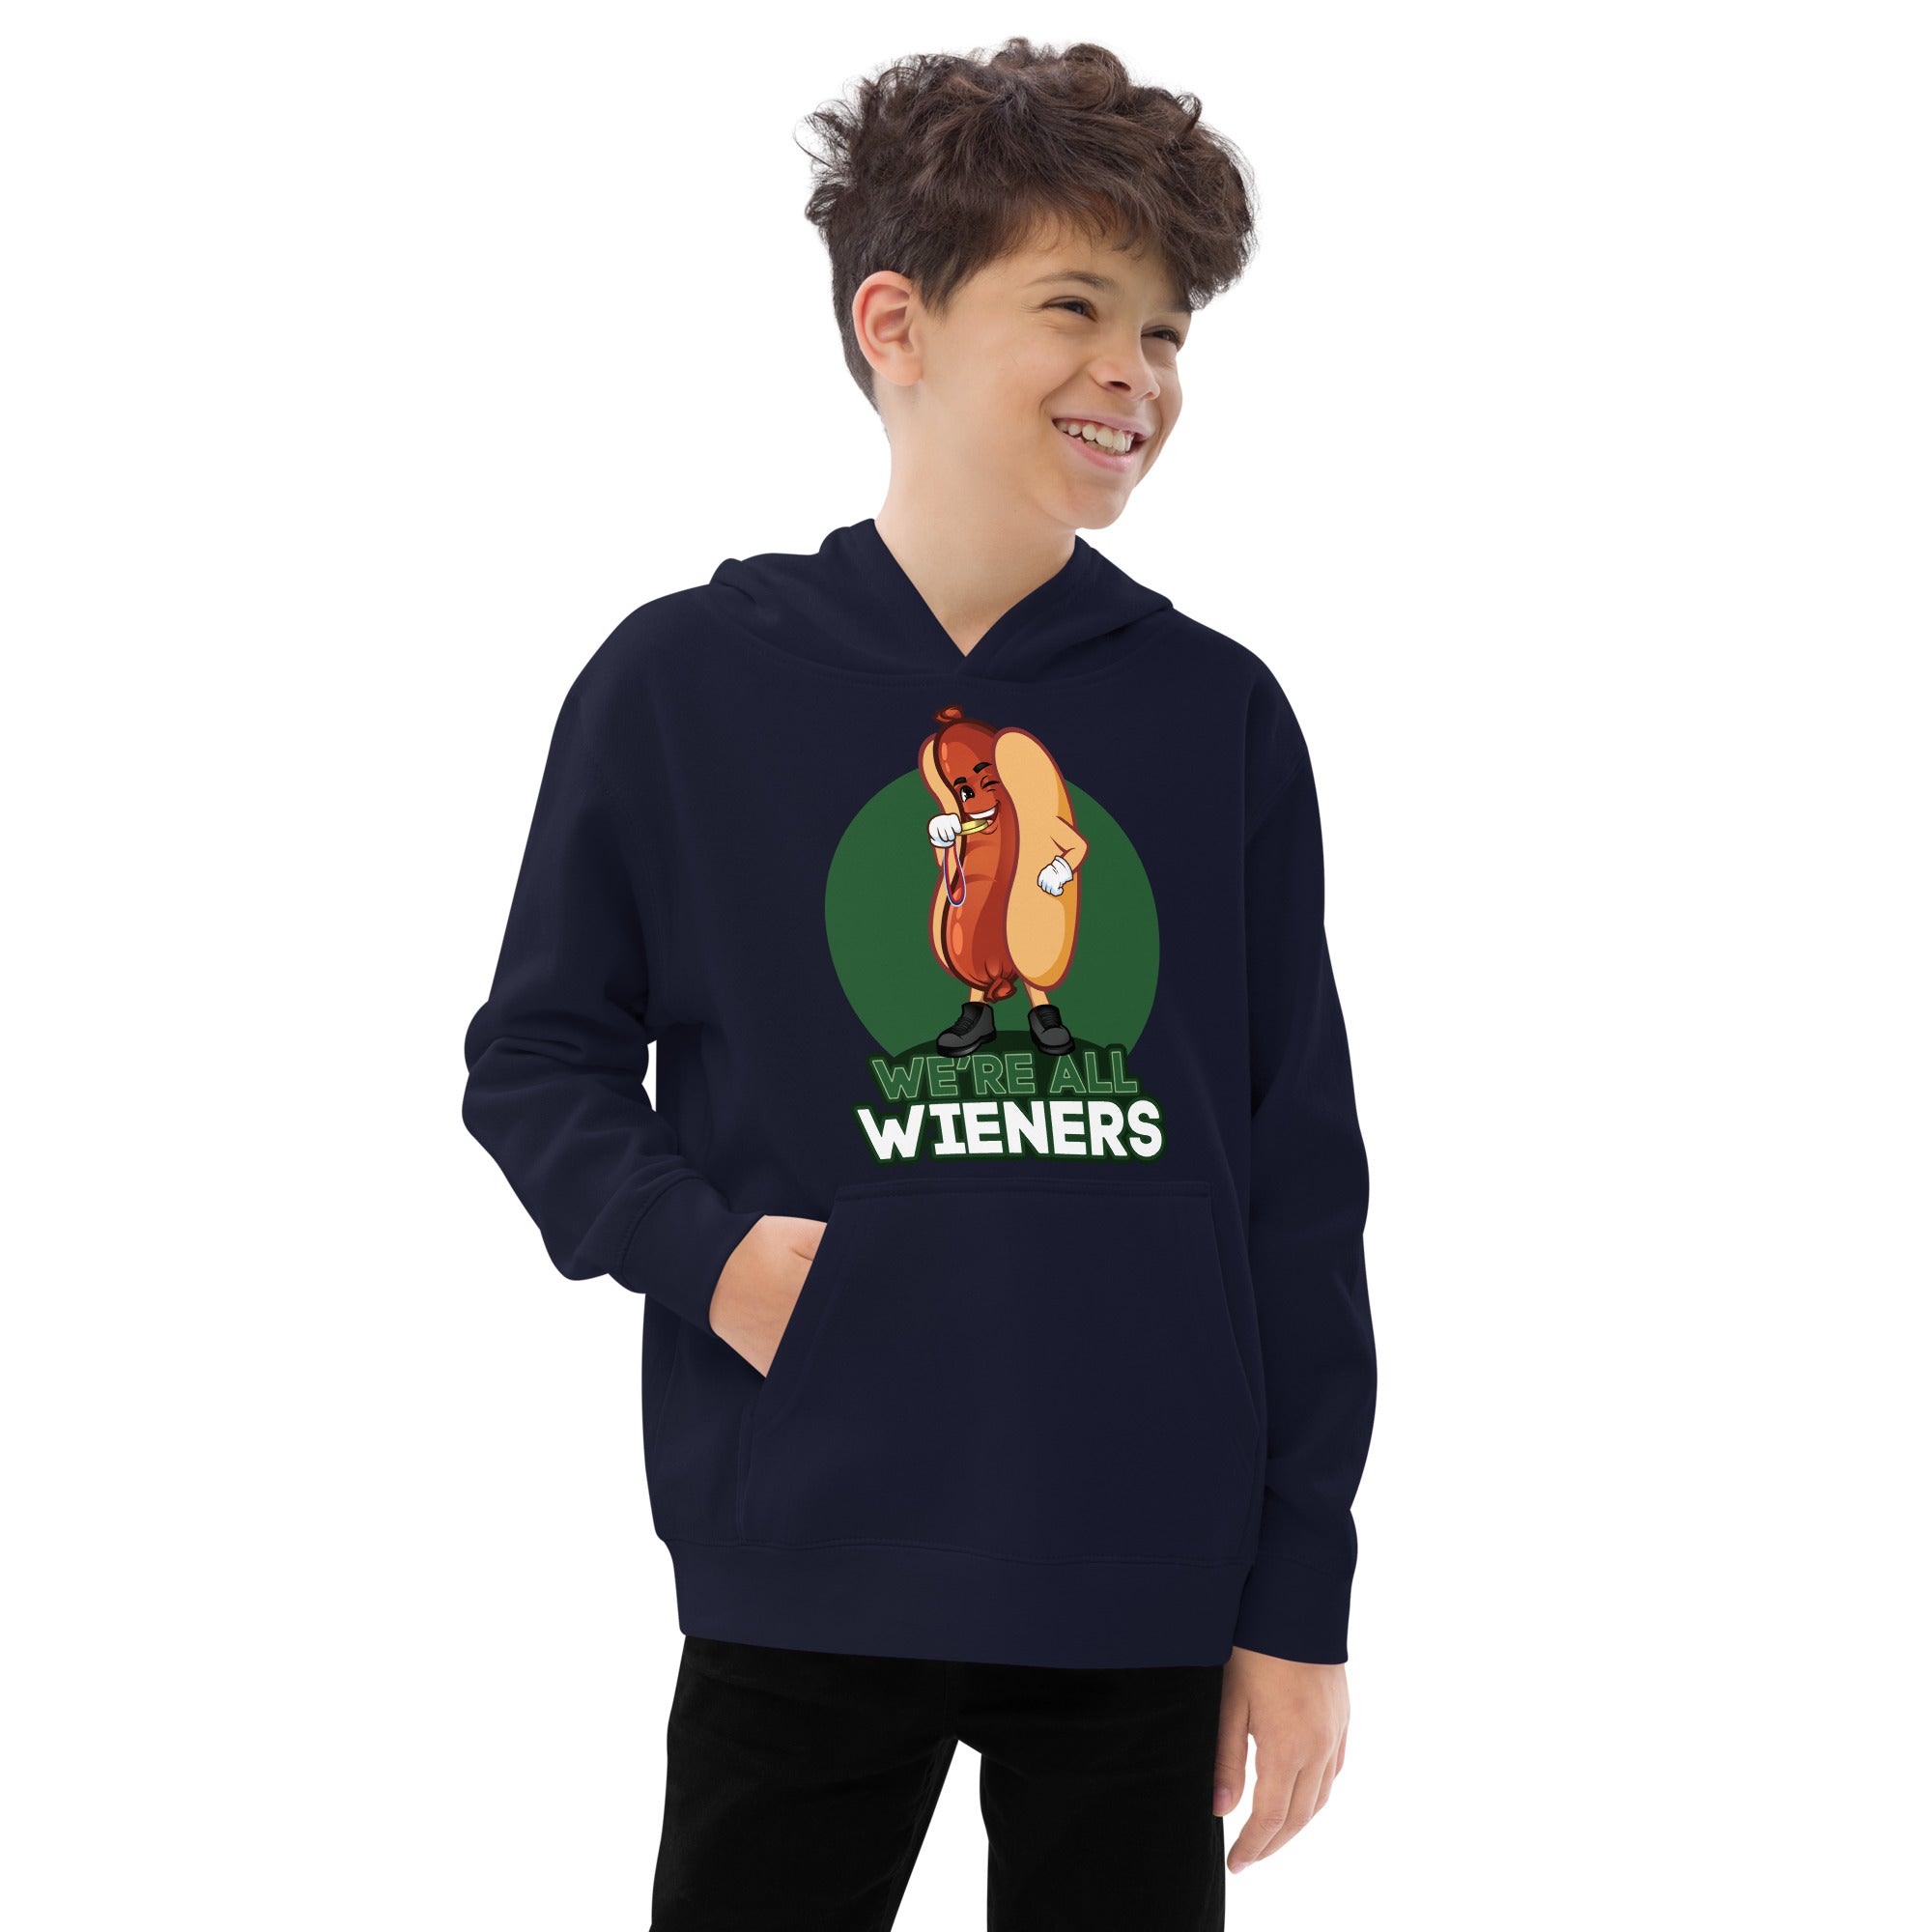 We're All Wieners - Kids Fleece Hoodie - Green